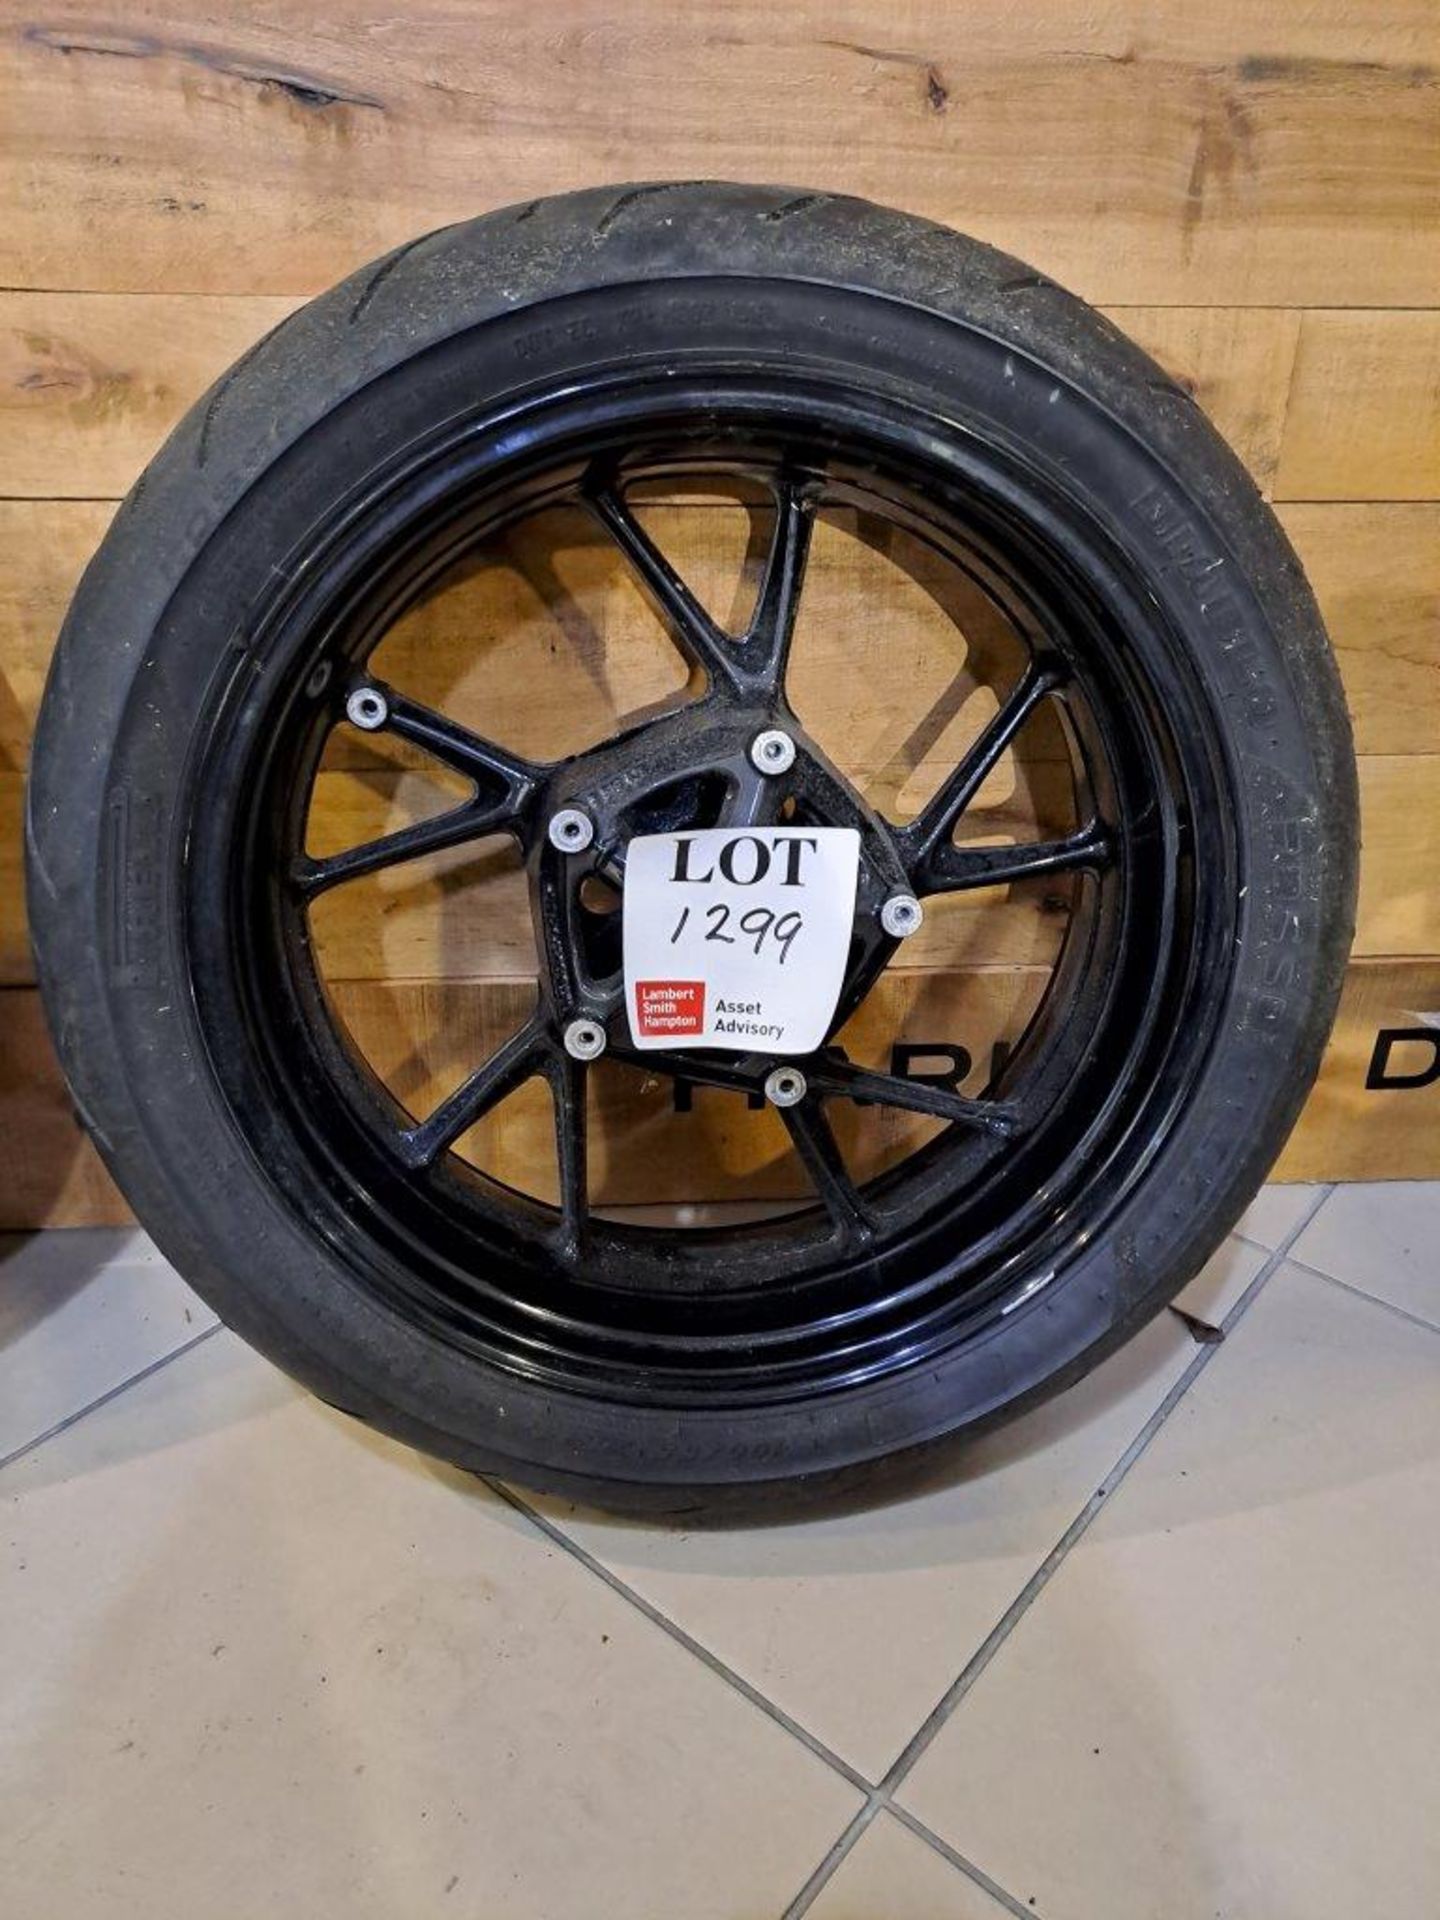 Harley Davidson 190/55-ZR17 Wheel and Tyre